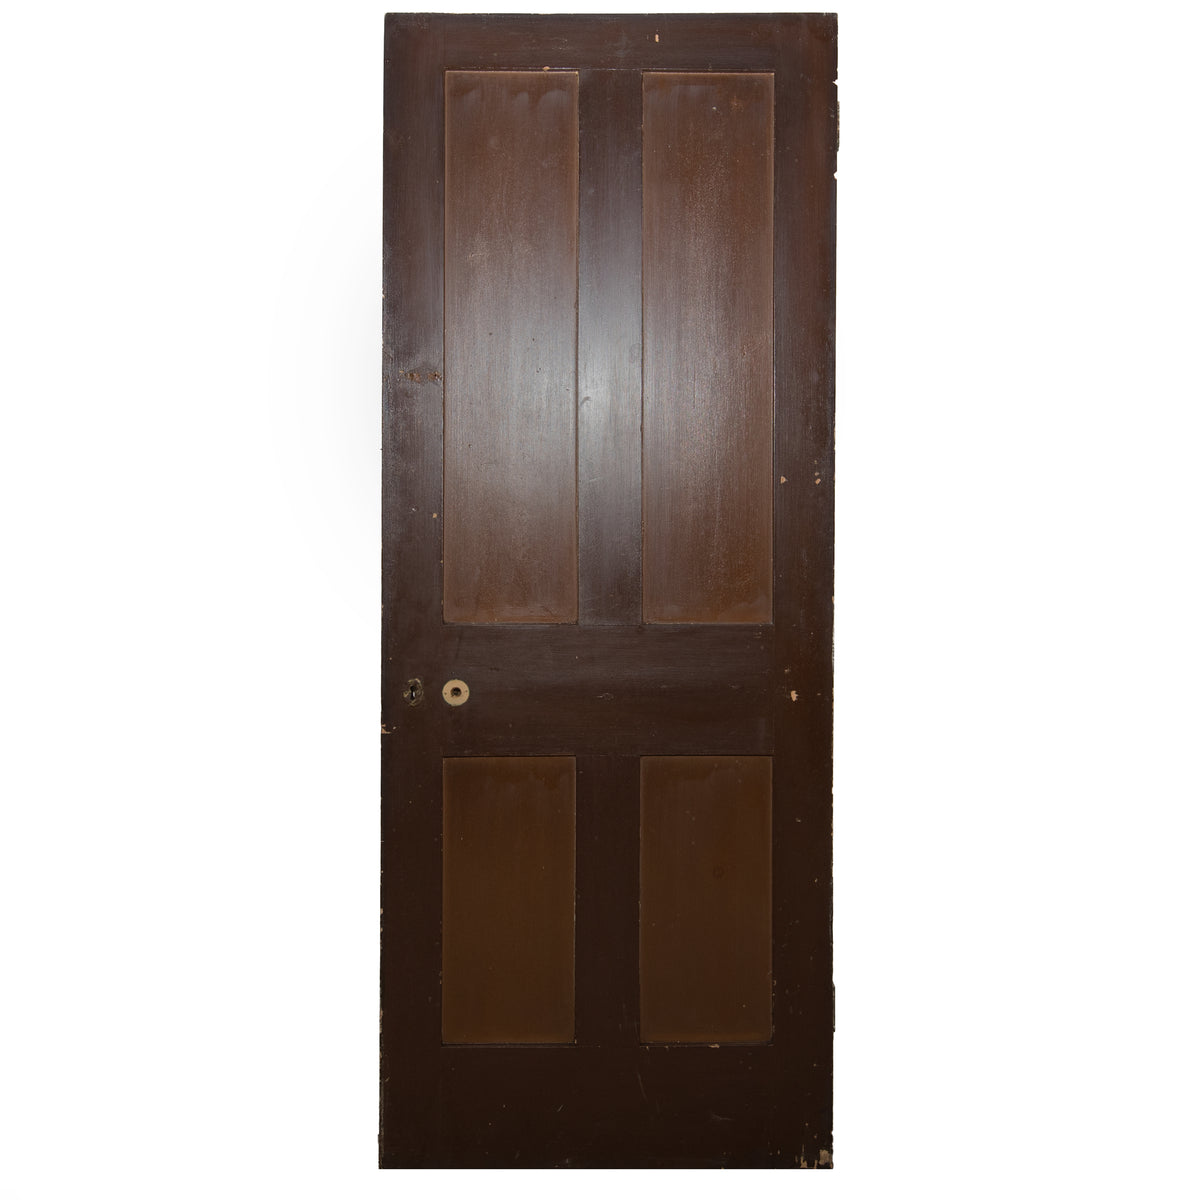 Victorian 4 Panel Door - 196.5cm x 75cm | The Architectural Forum